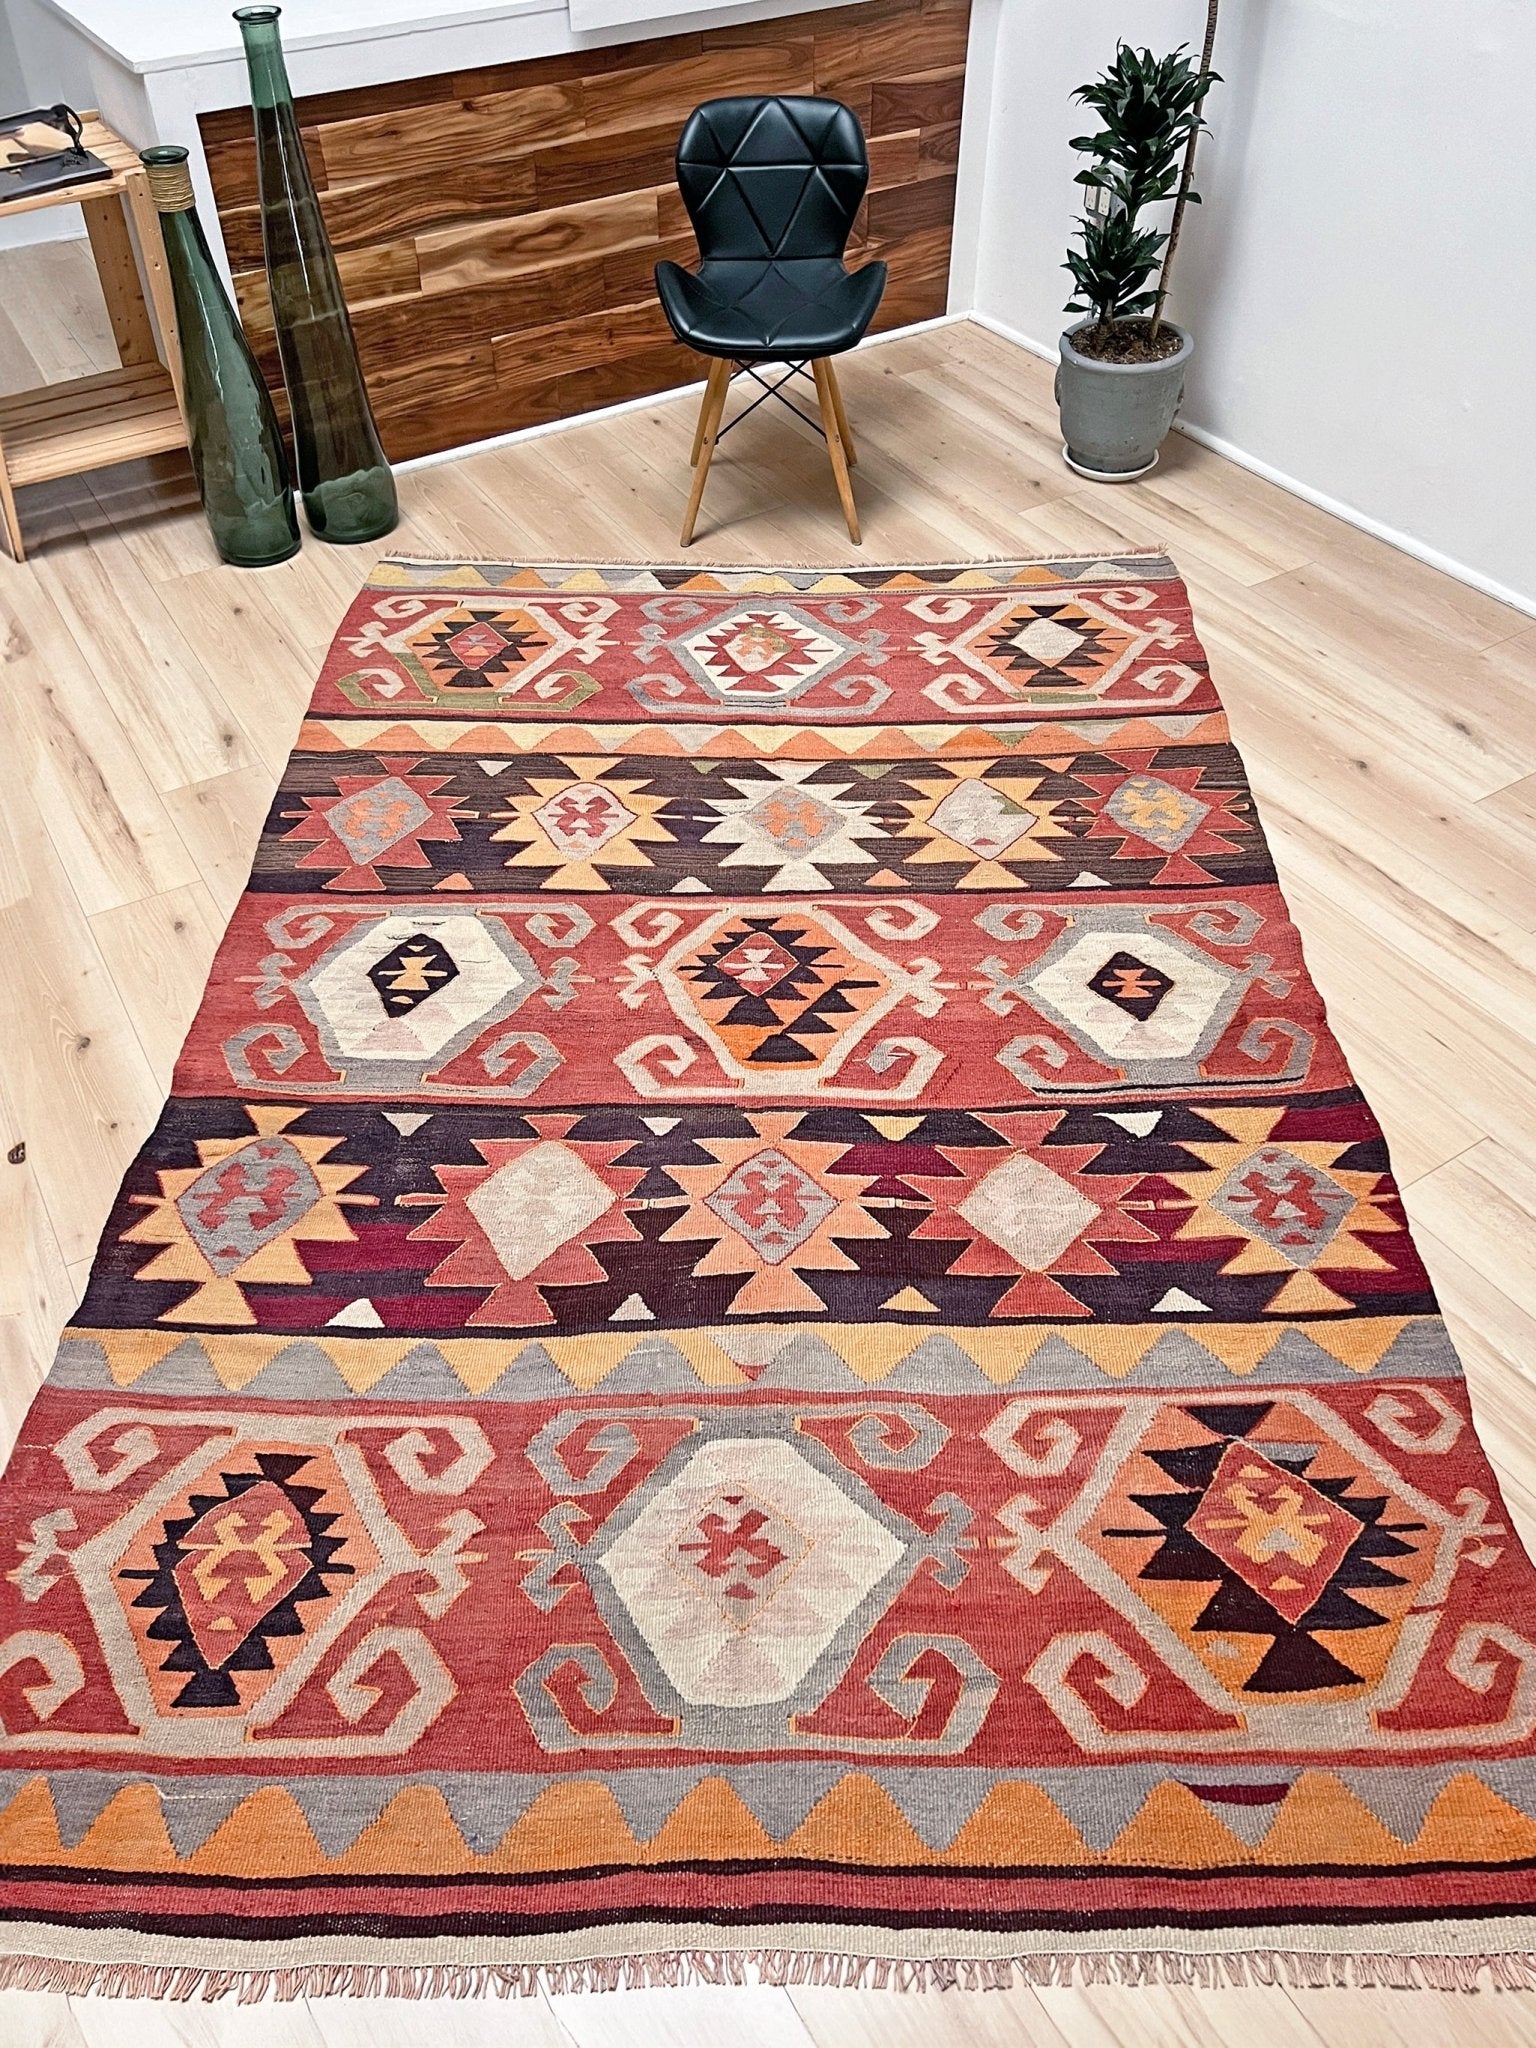 Kayseri Turkish kilim rug shop san francisco bay area. Handmade wool flatweave rug. Buy tribal navajo  style rug online.